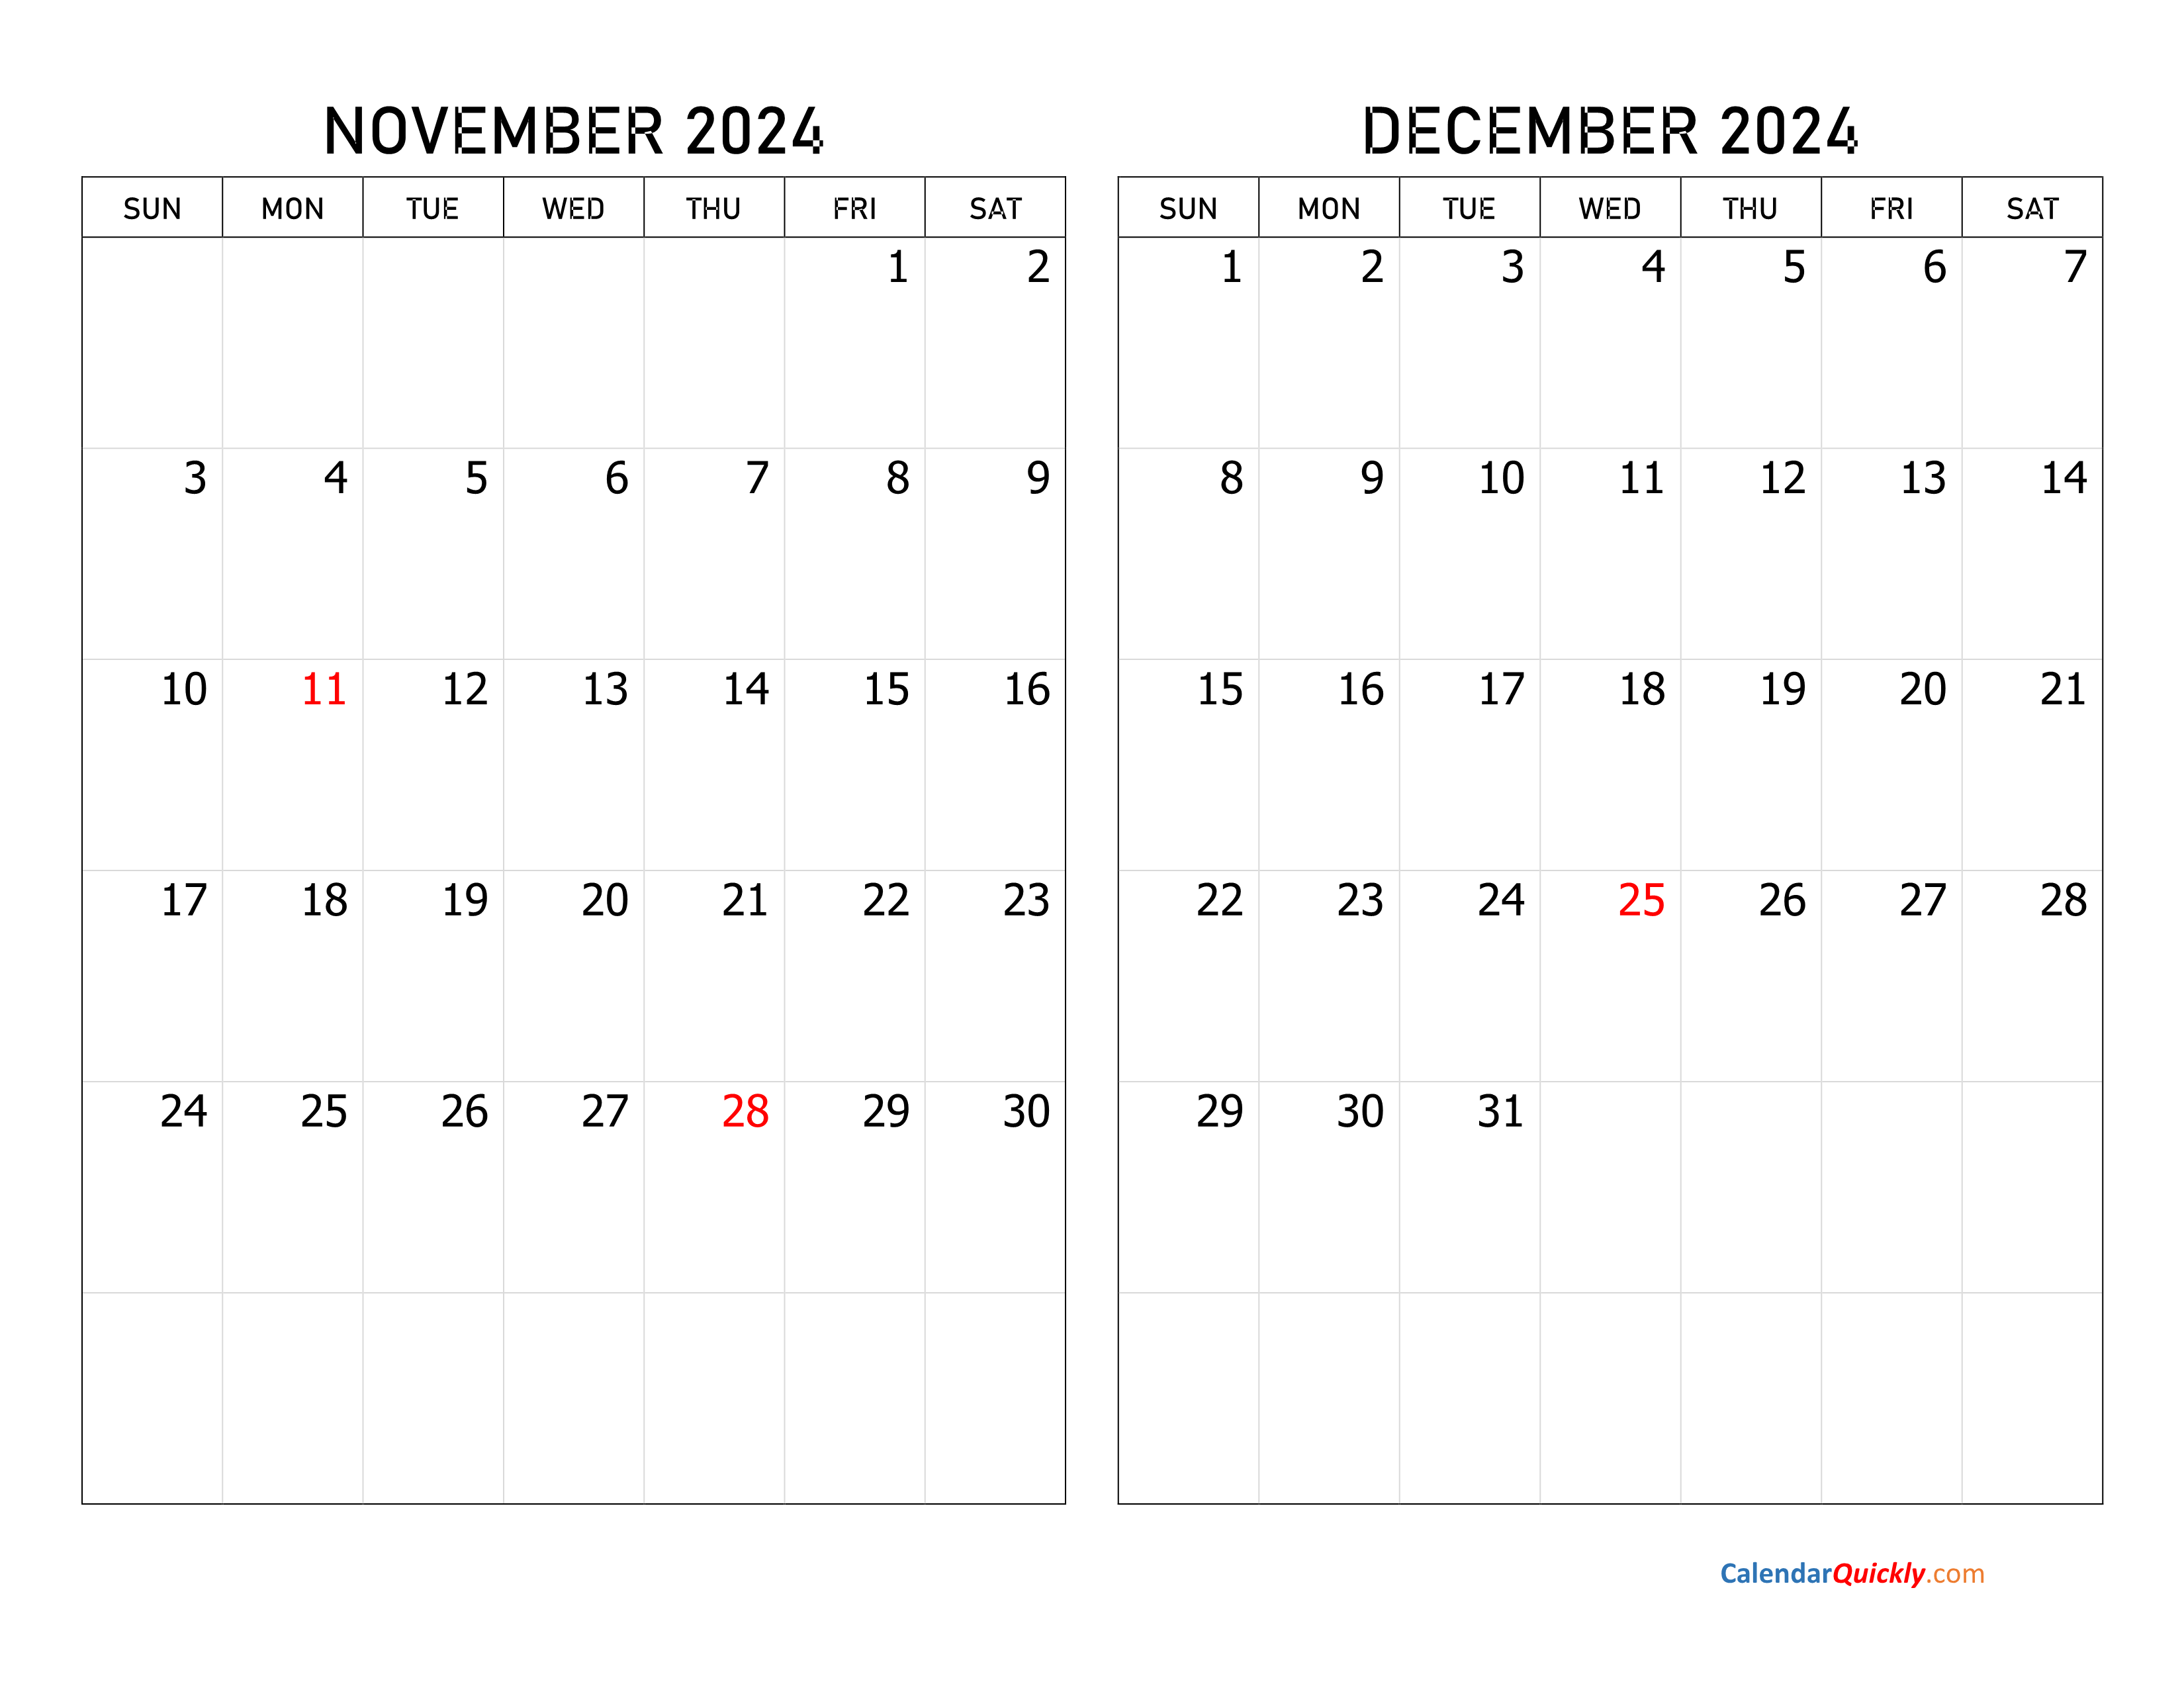 Free Printable 2024 November And December Calendar 2024 CALENDAR - Free Printable 2024 Calendar October November December 2024